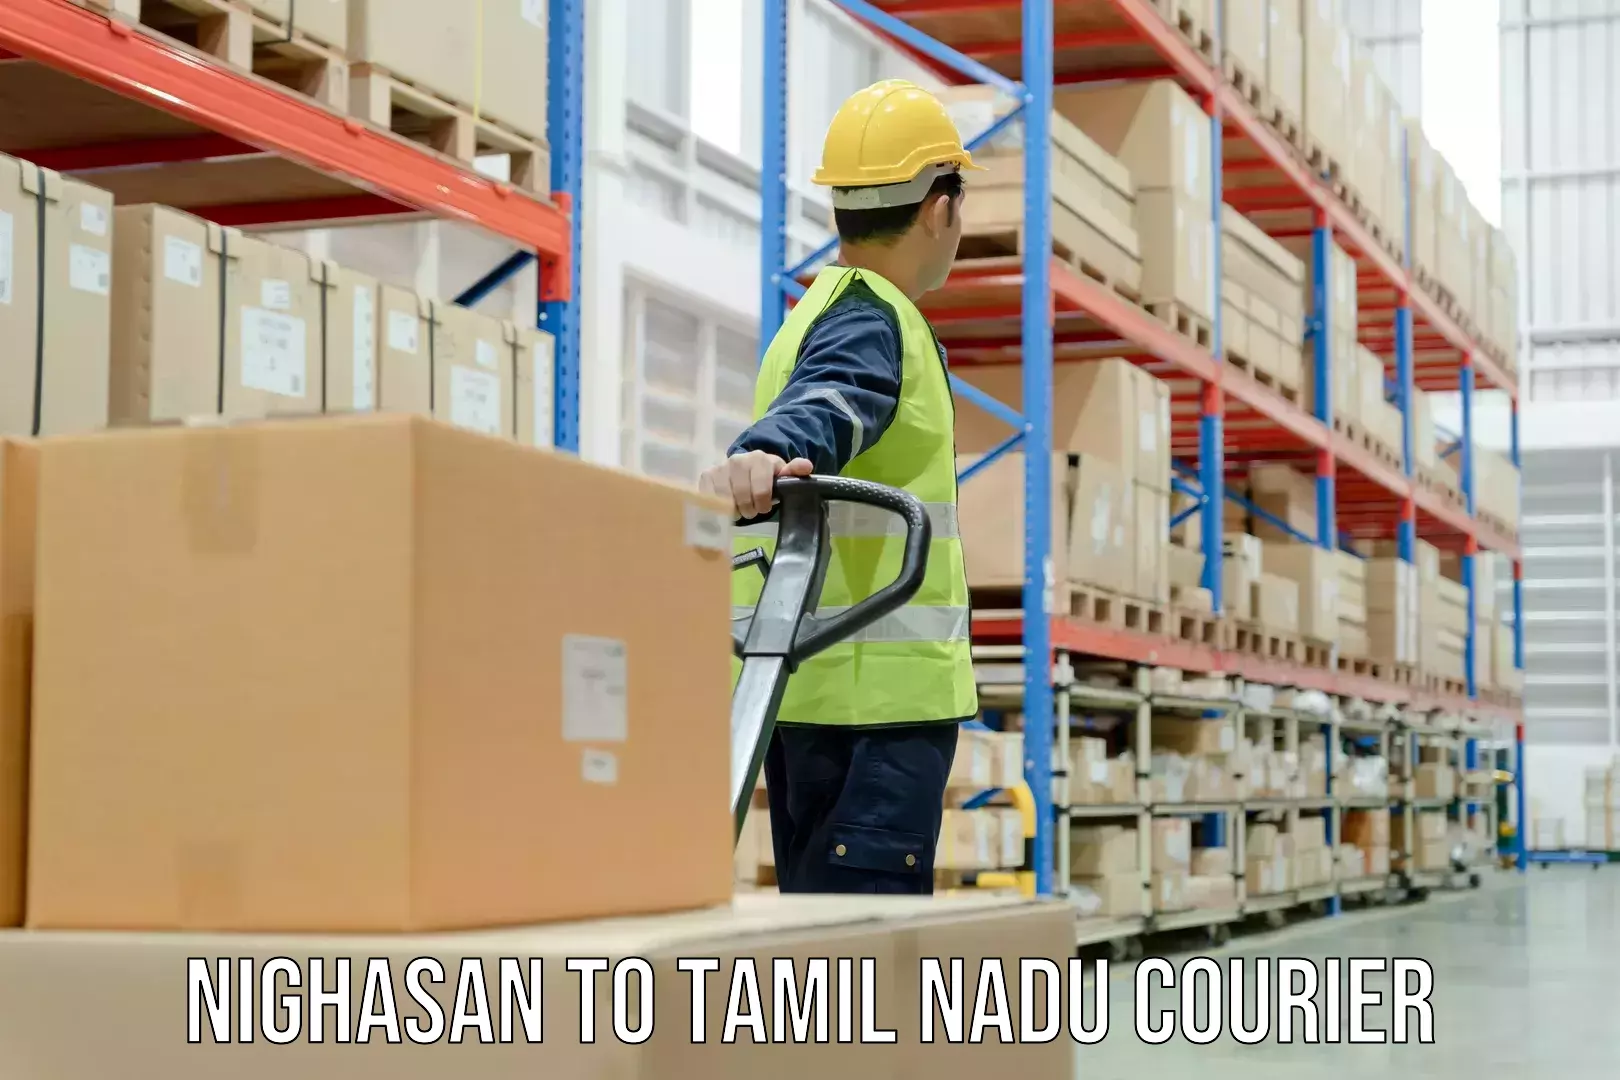 Quick booking process Nighasan to Tamil Nadu